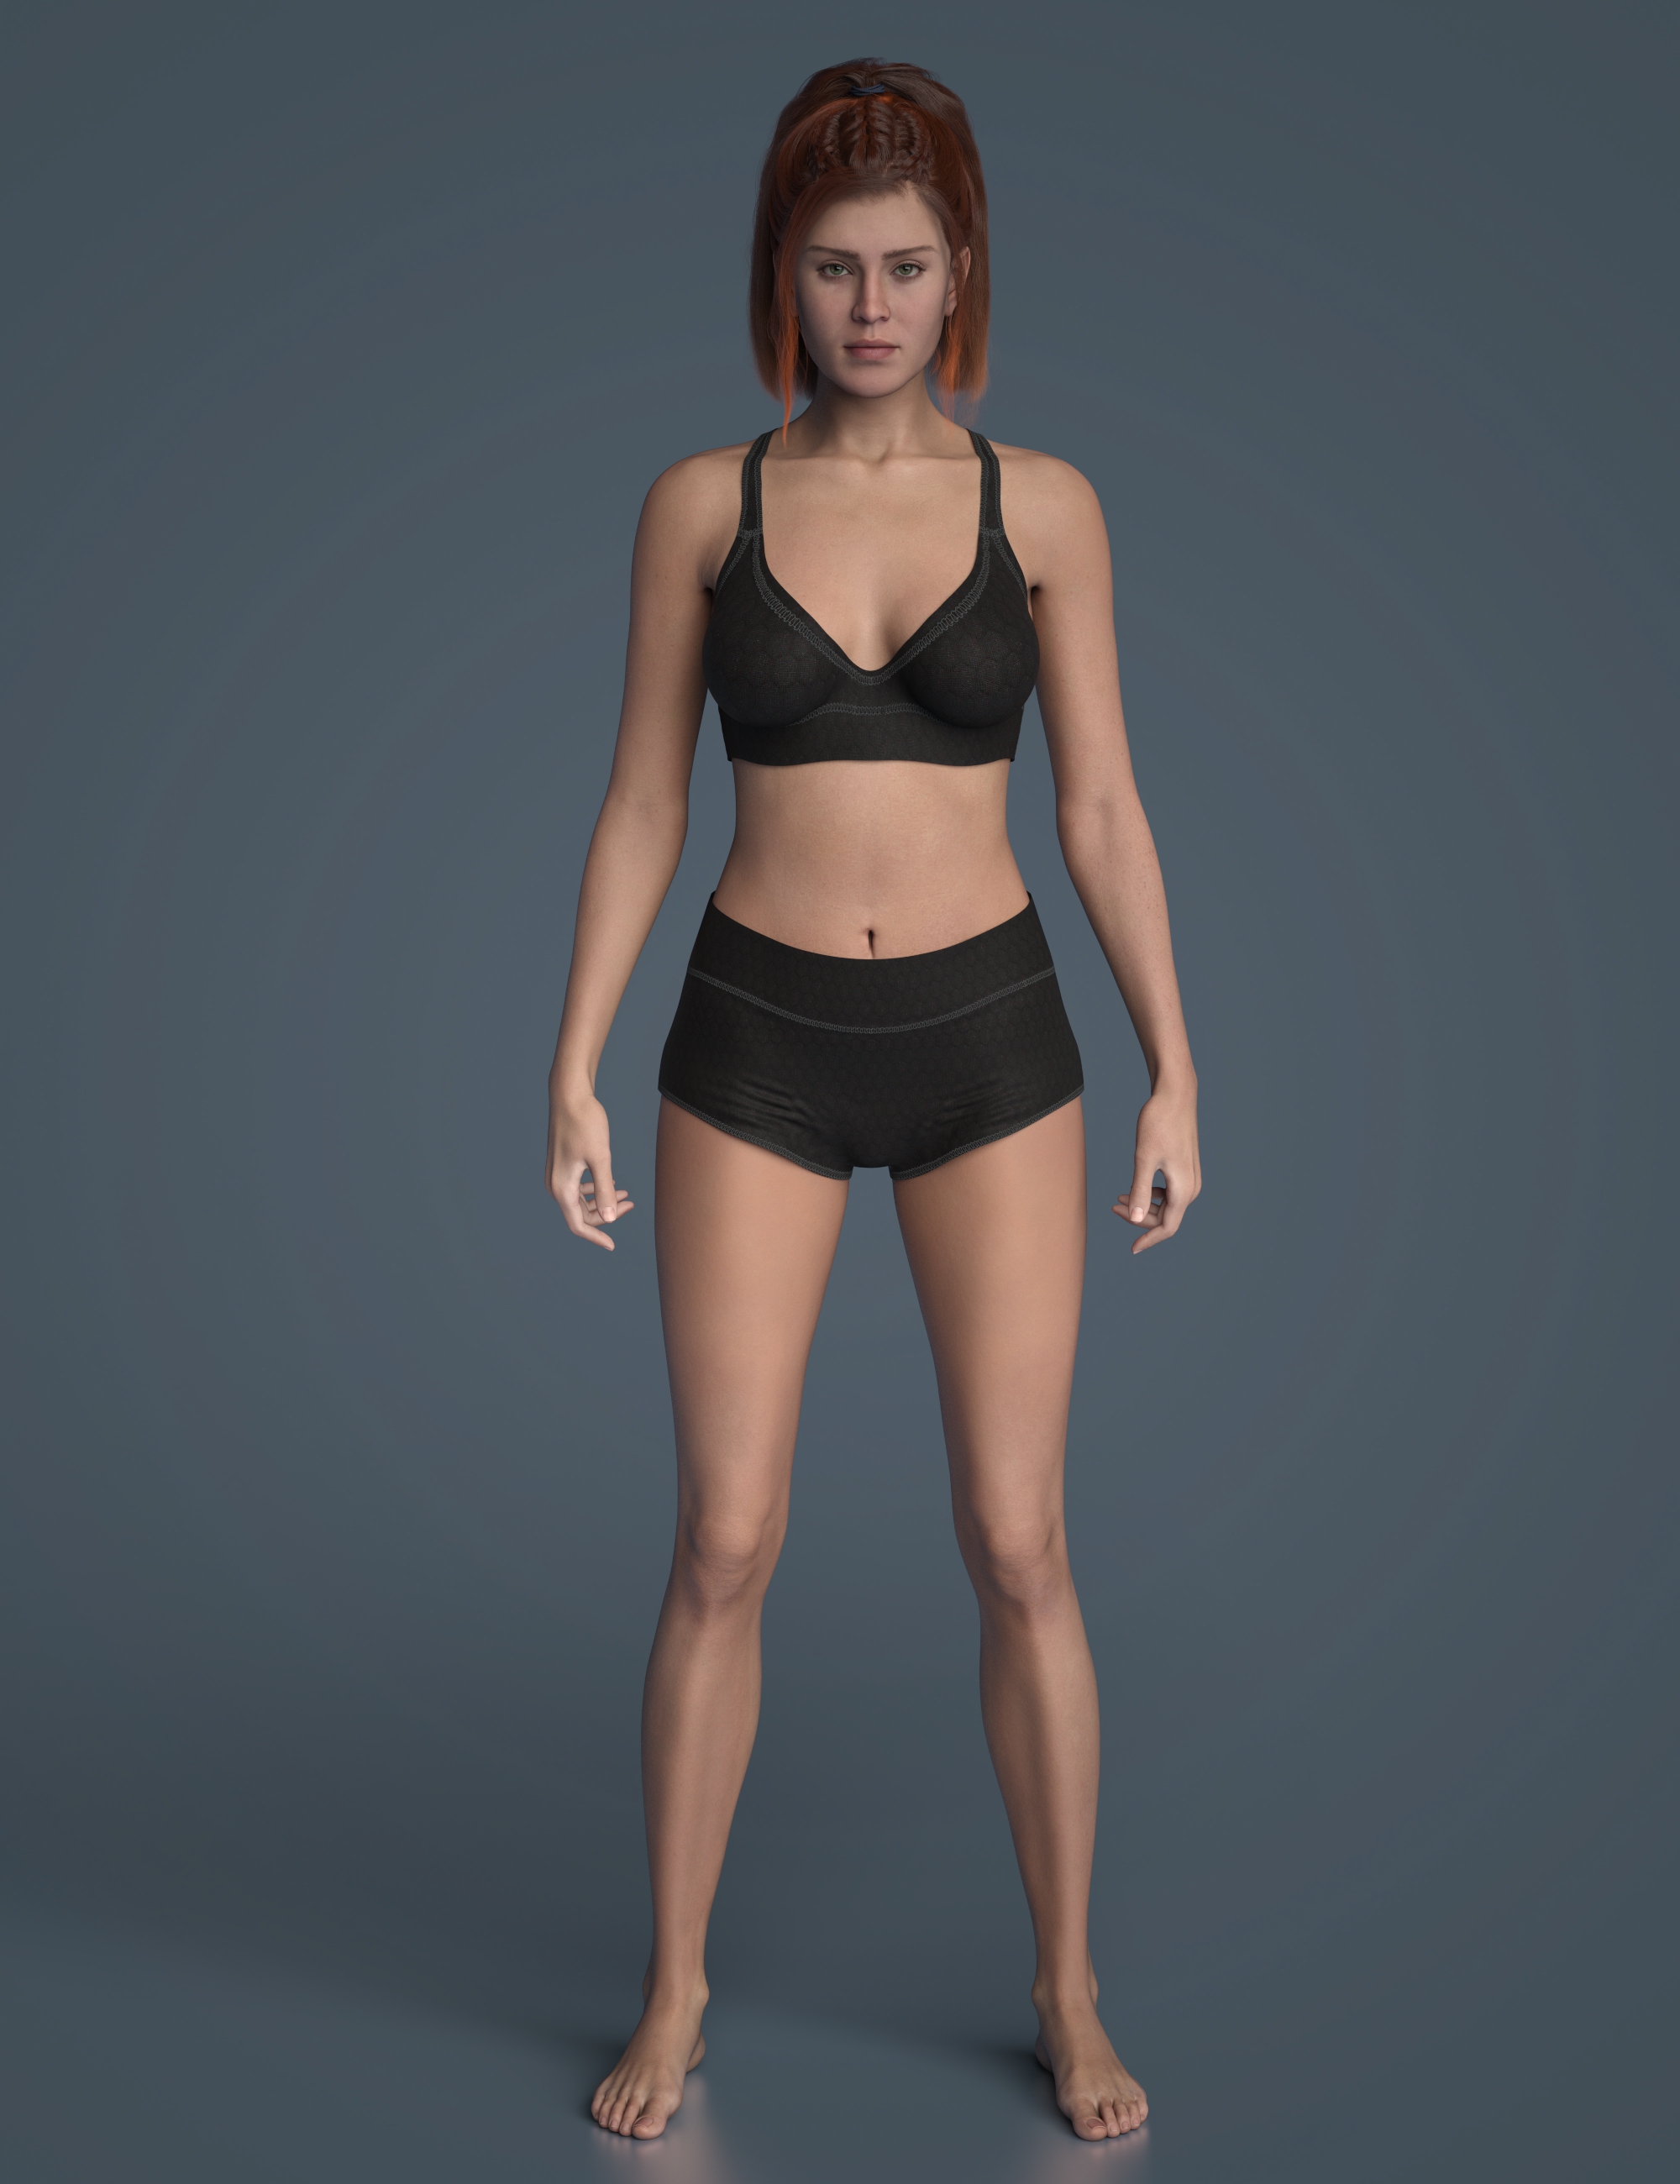 Tabitha 9 Curvy Shape Add-On by: , 3D Models by Daz 3D